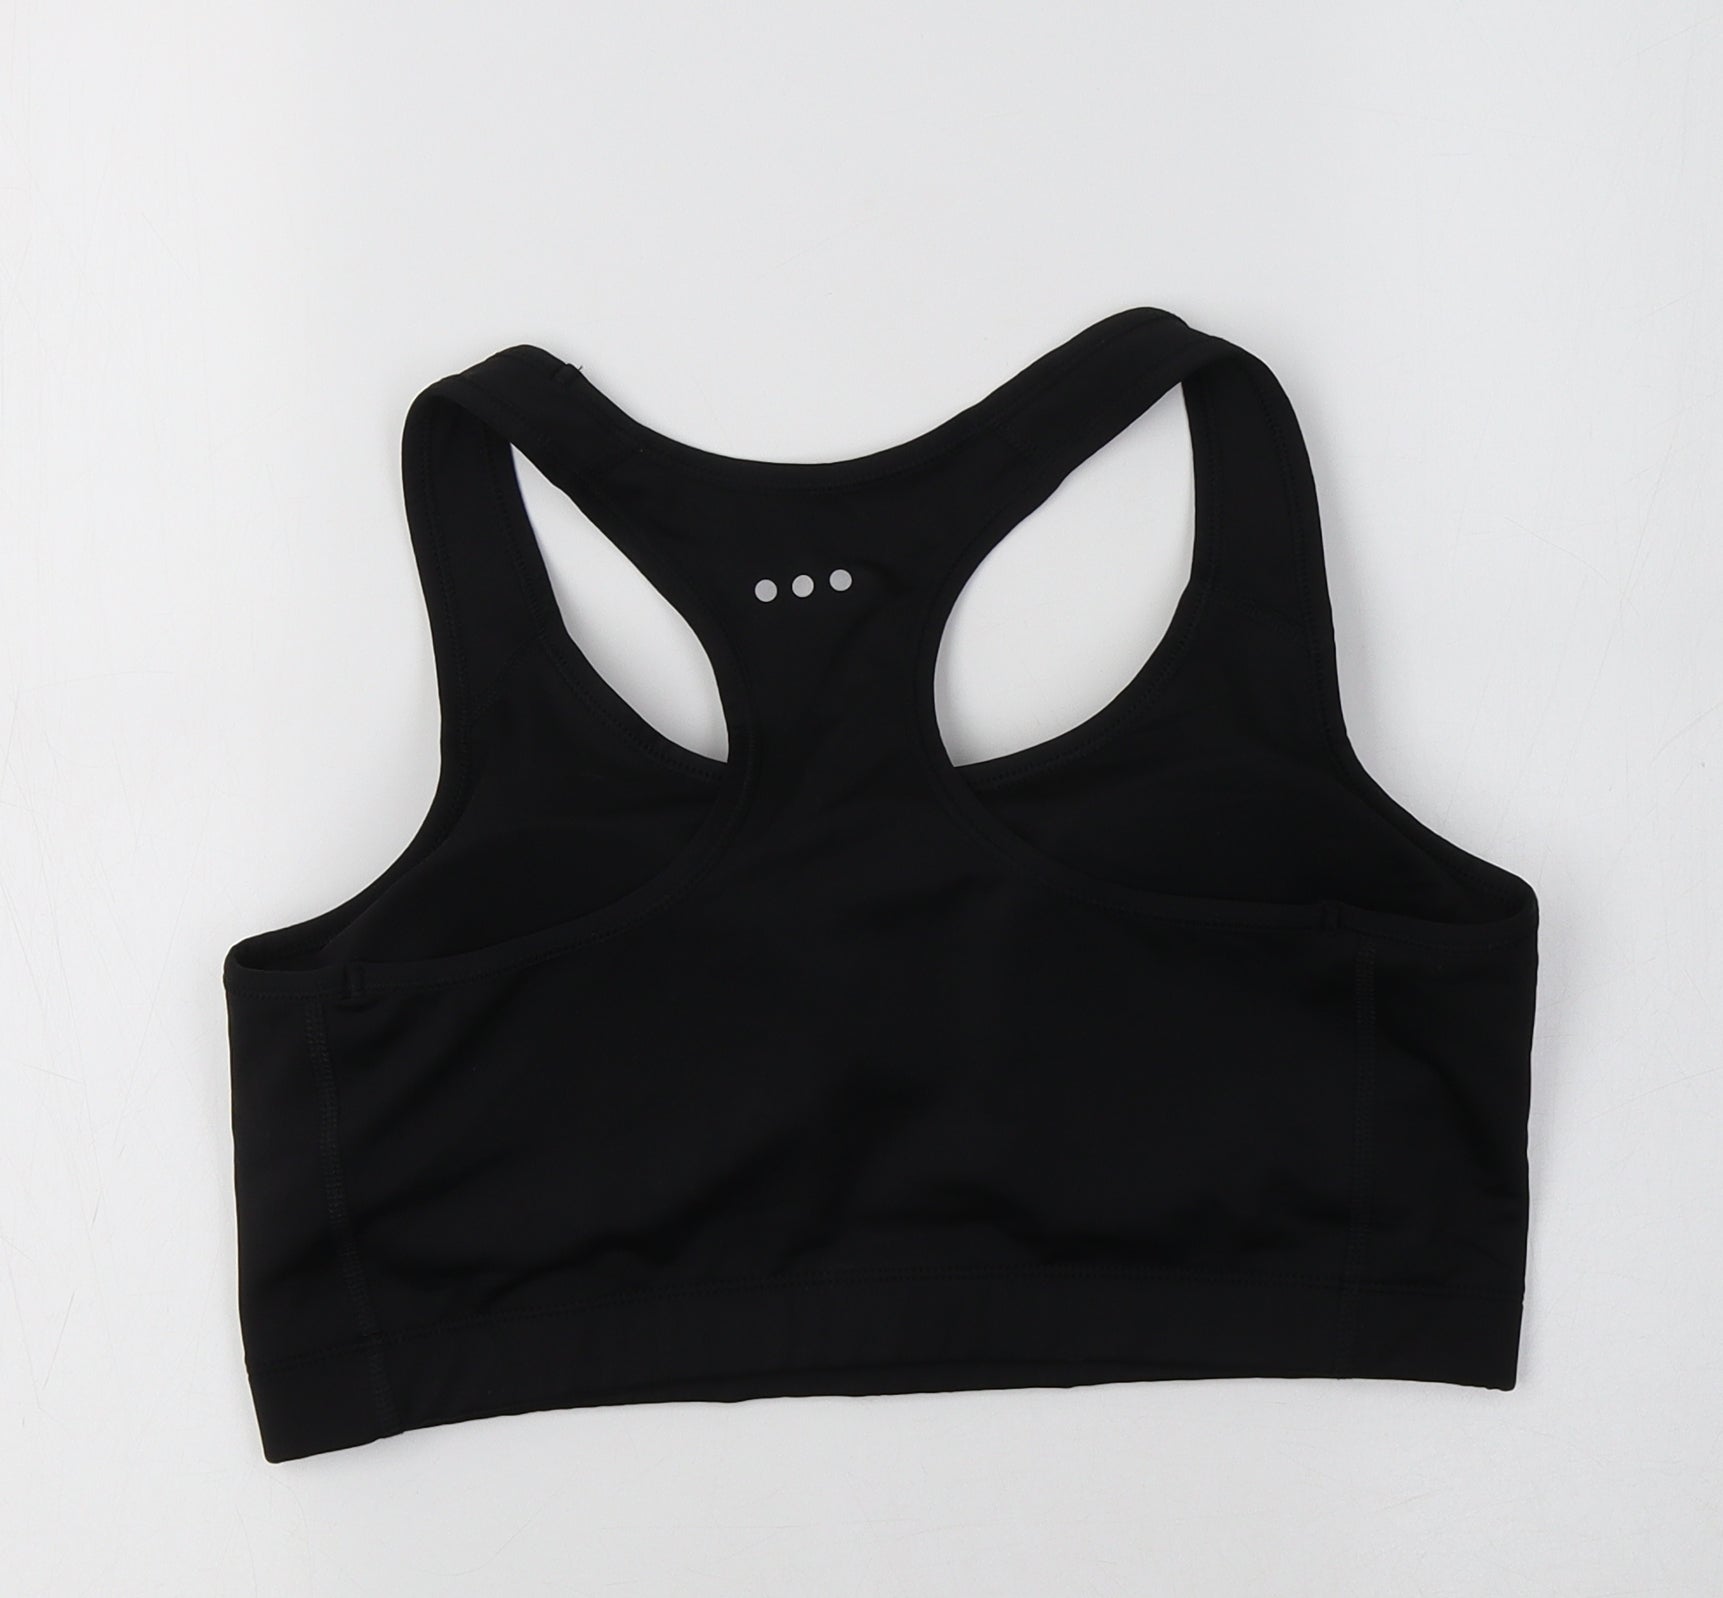 Souluxe Womens Black Polyester Cropped Tank Size L Scoop Neck - Sports Bra